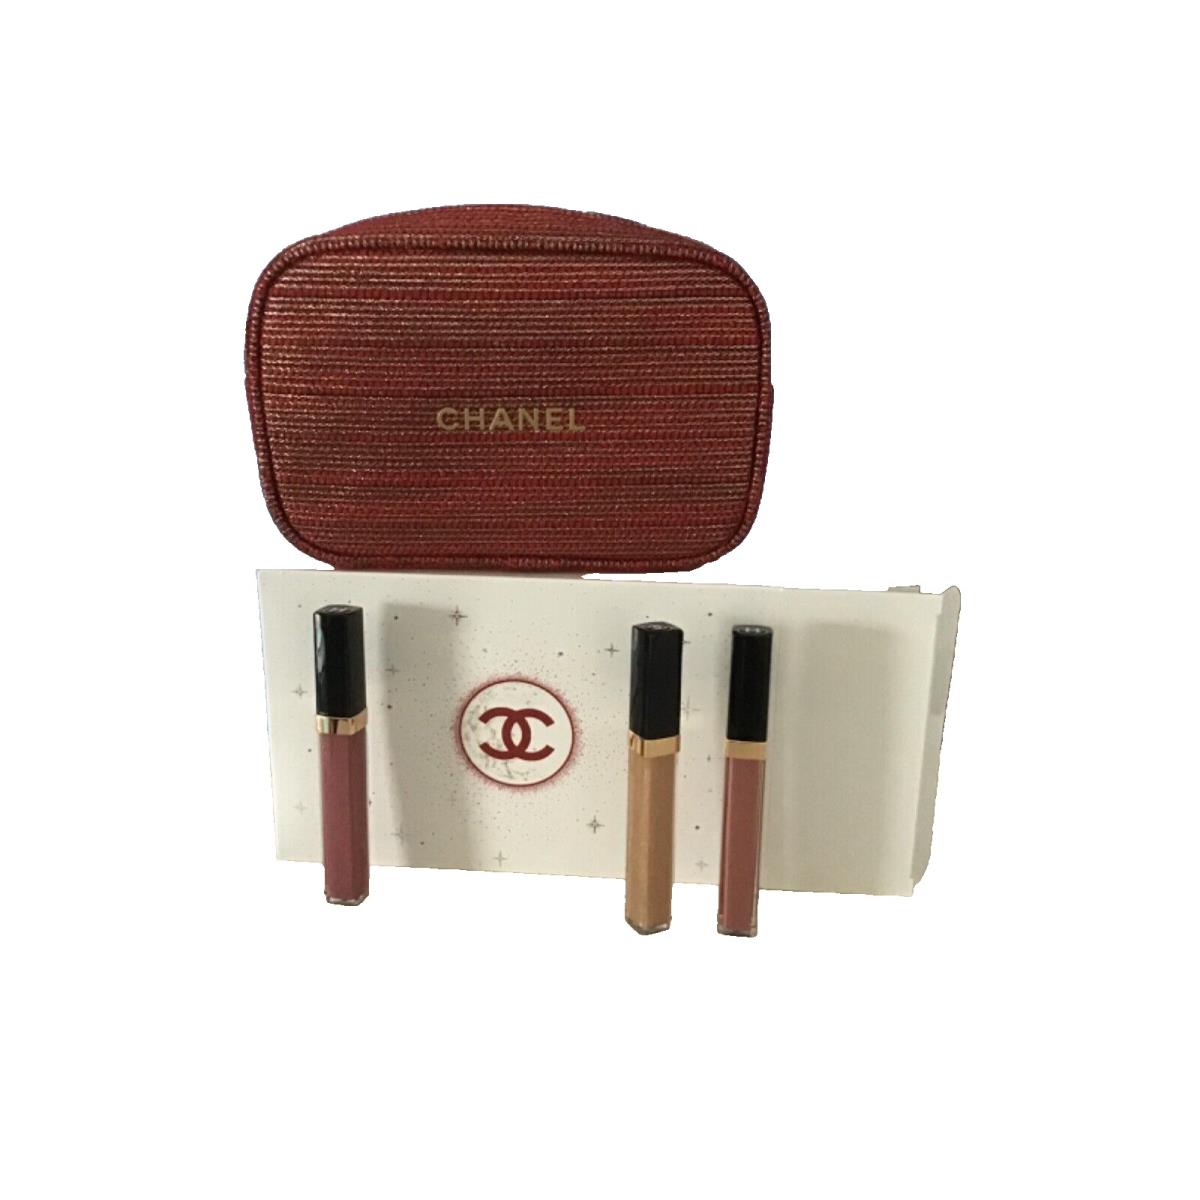 Chanel Limited Sheer Genius 3 Lip Gloss Trio Set In Purse Bag